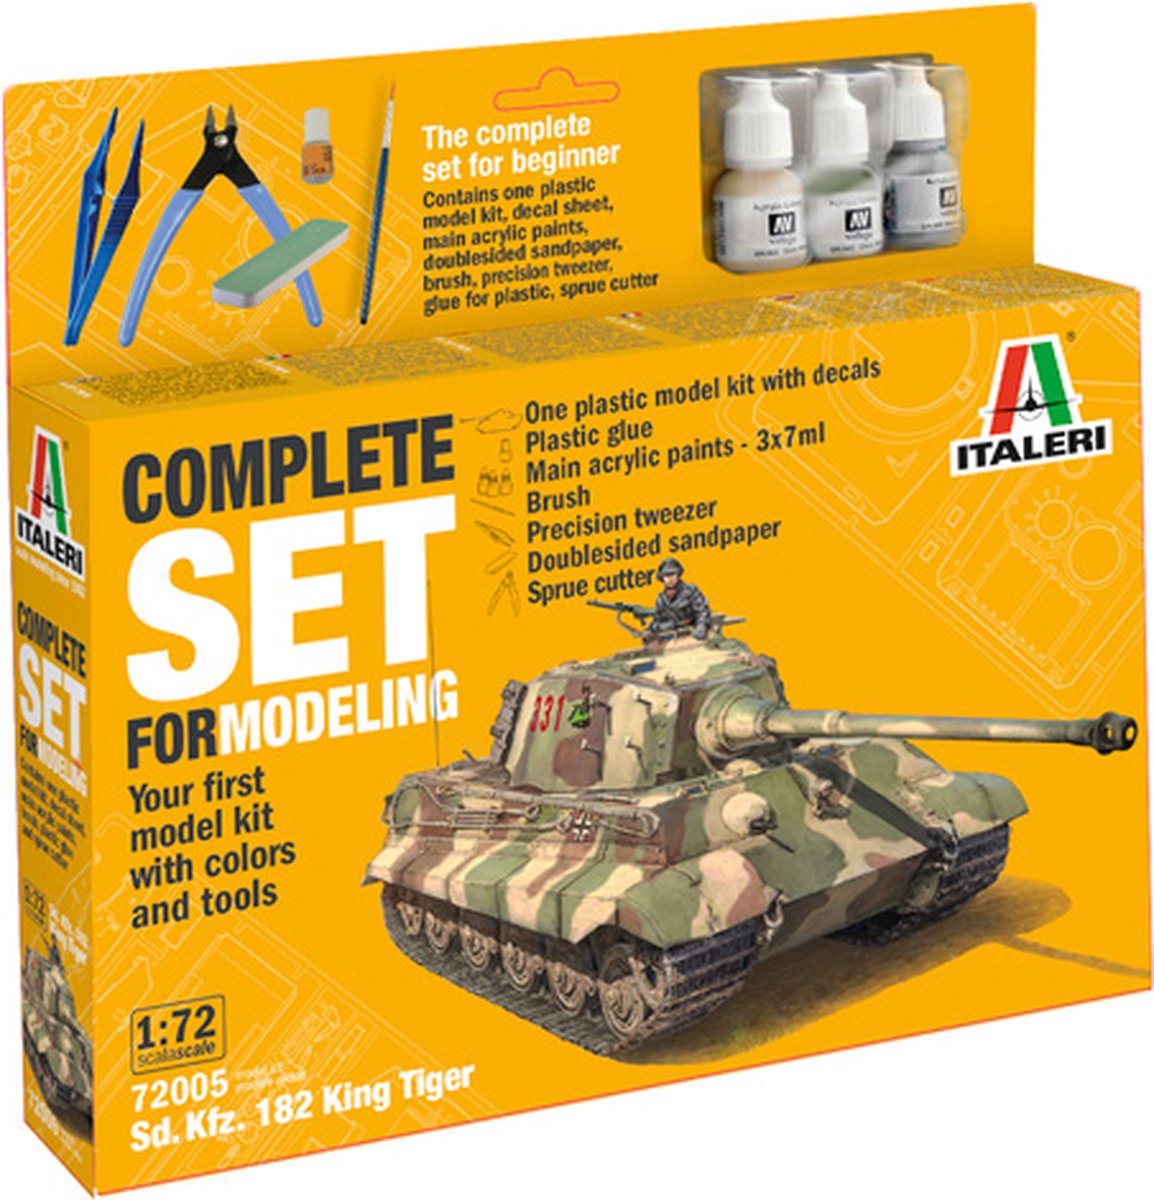 Italeri 1:72 72005 SD.KFZ. 182 King Tiger Tank Complete Set Starter Kit Plastic Modelbouwpakket